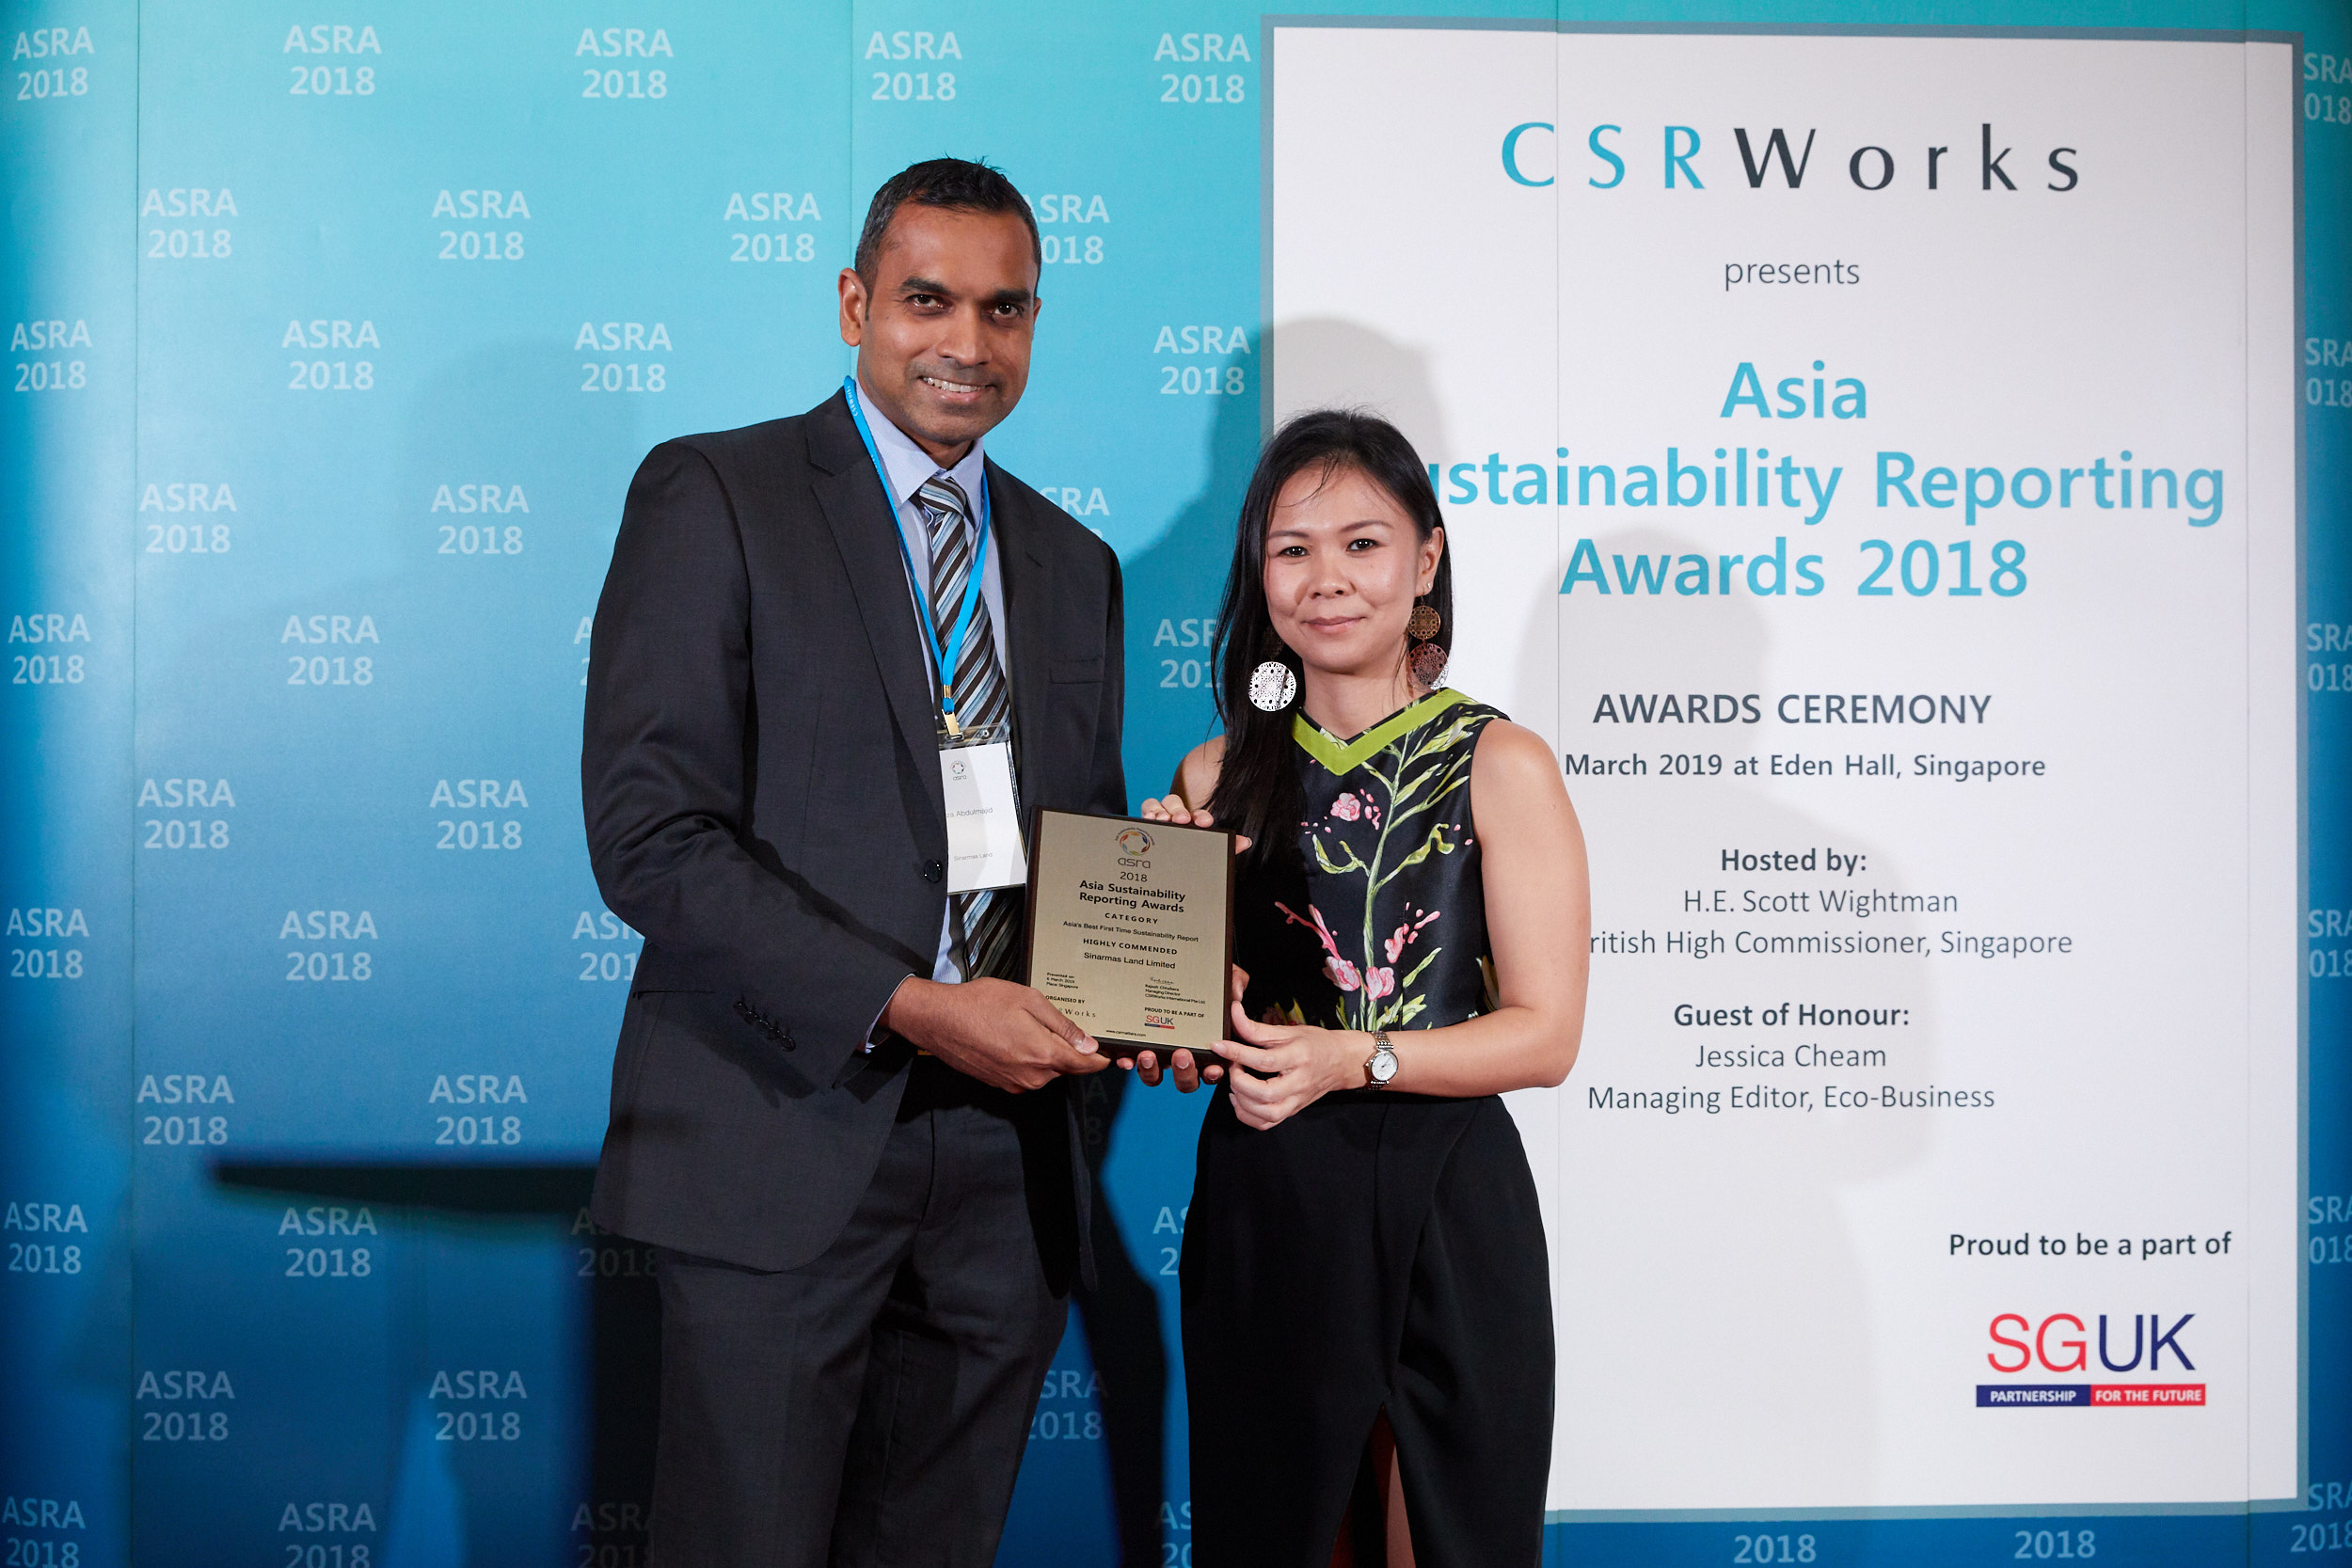 IMG_804 - Asia Sustainability Reporting Awards